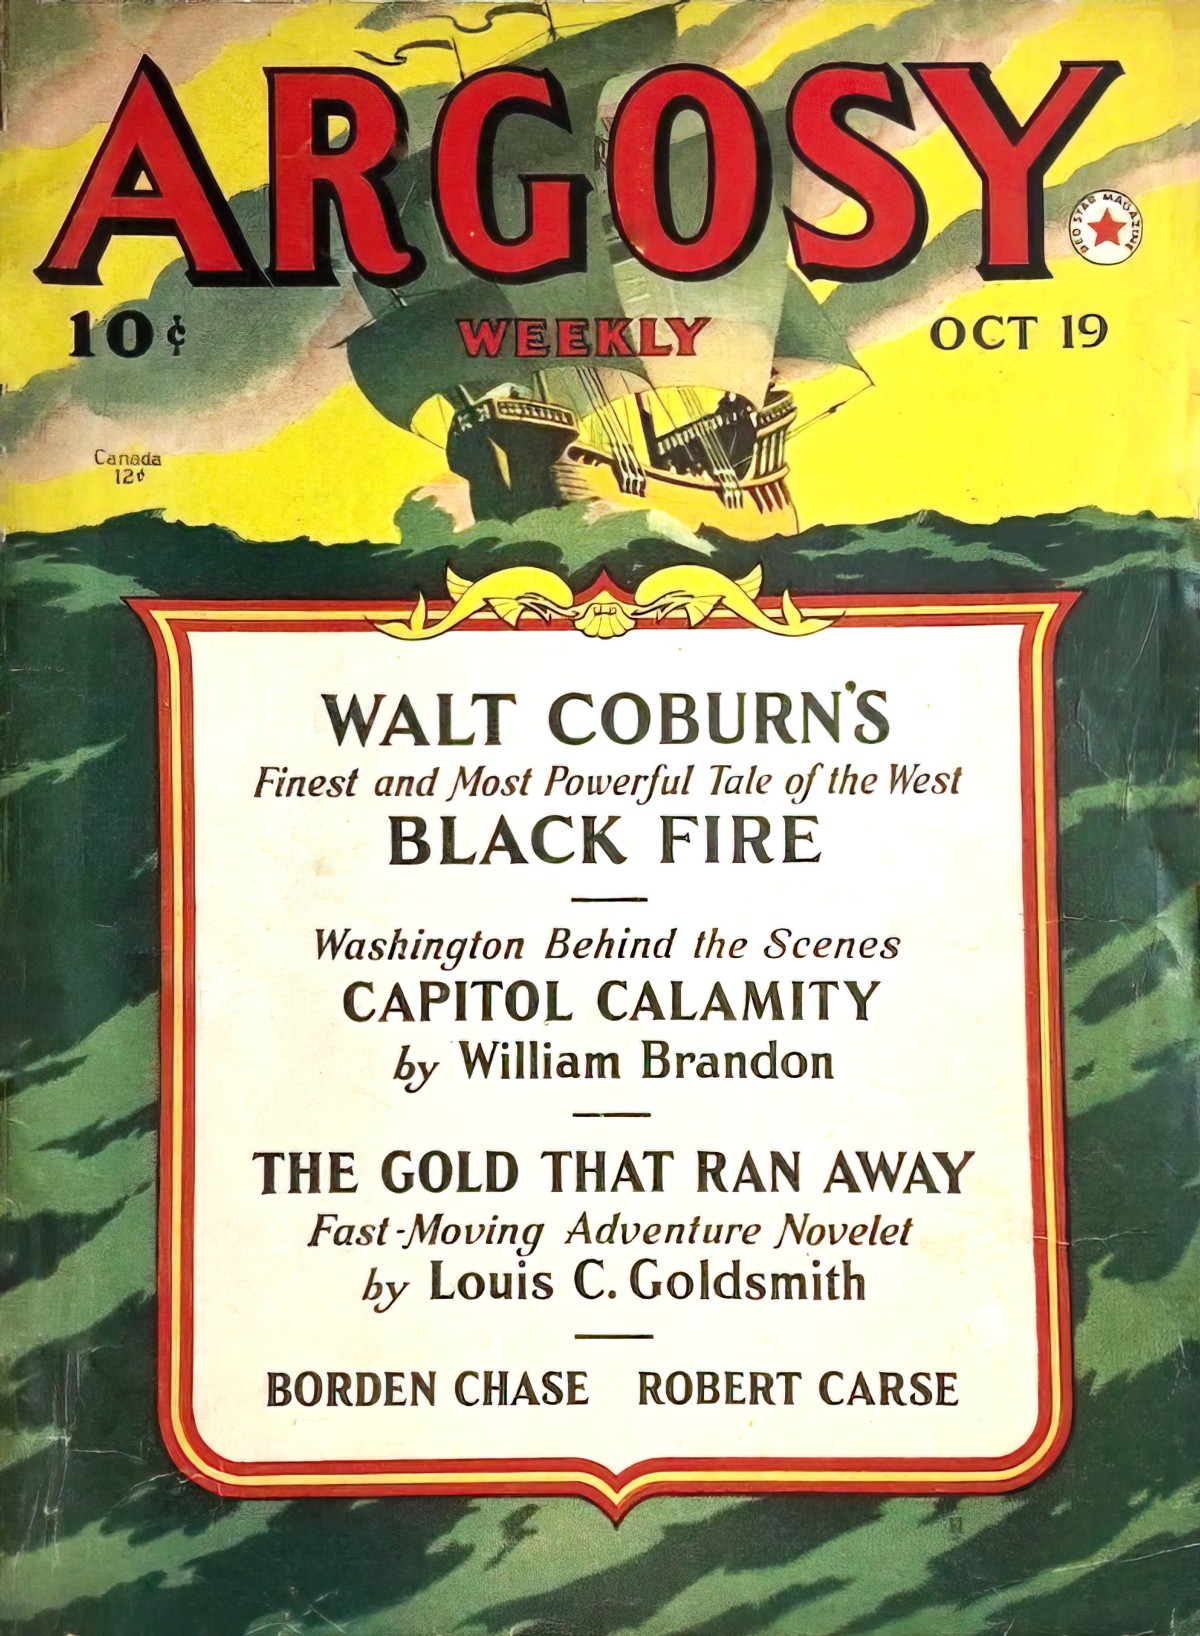 ARGOSY pulp magazine October 19 1940